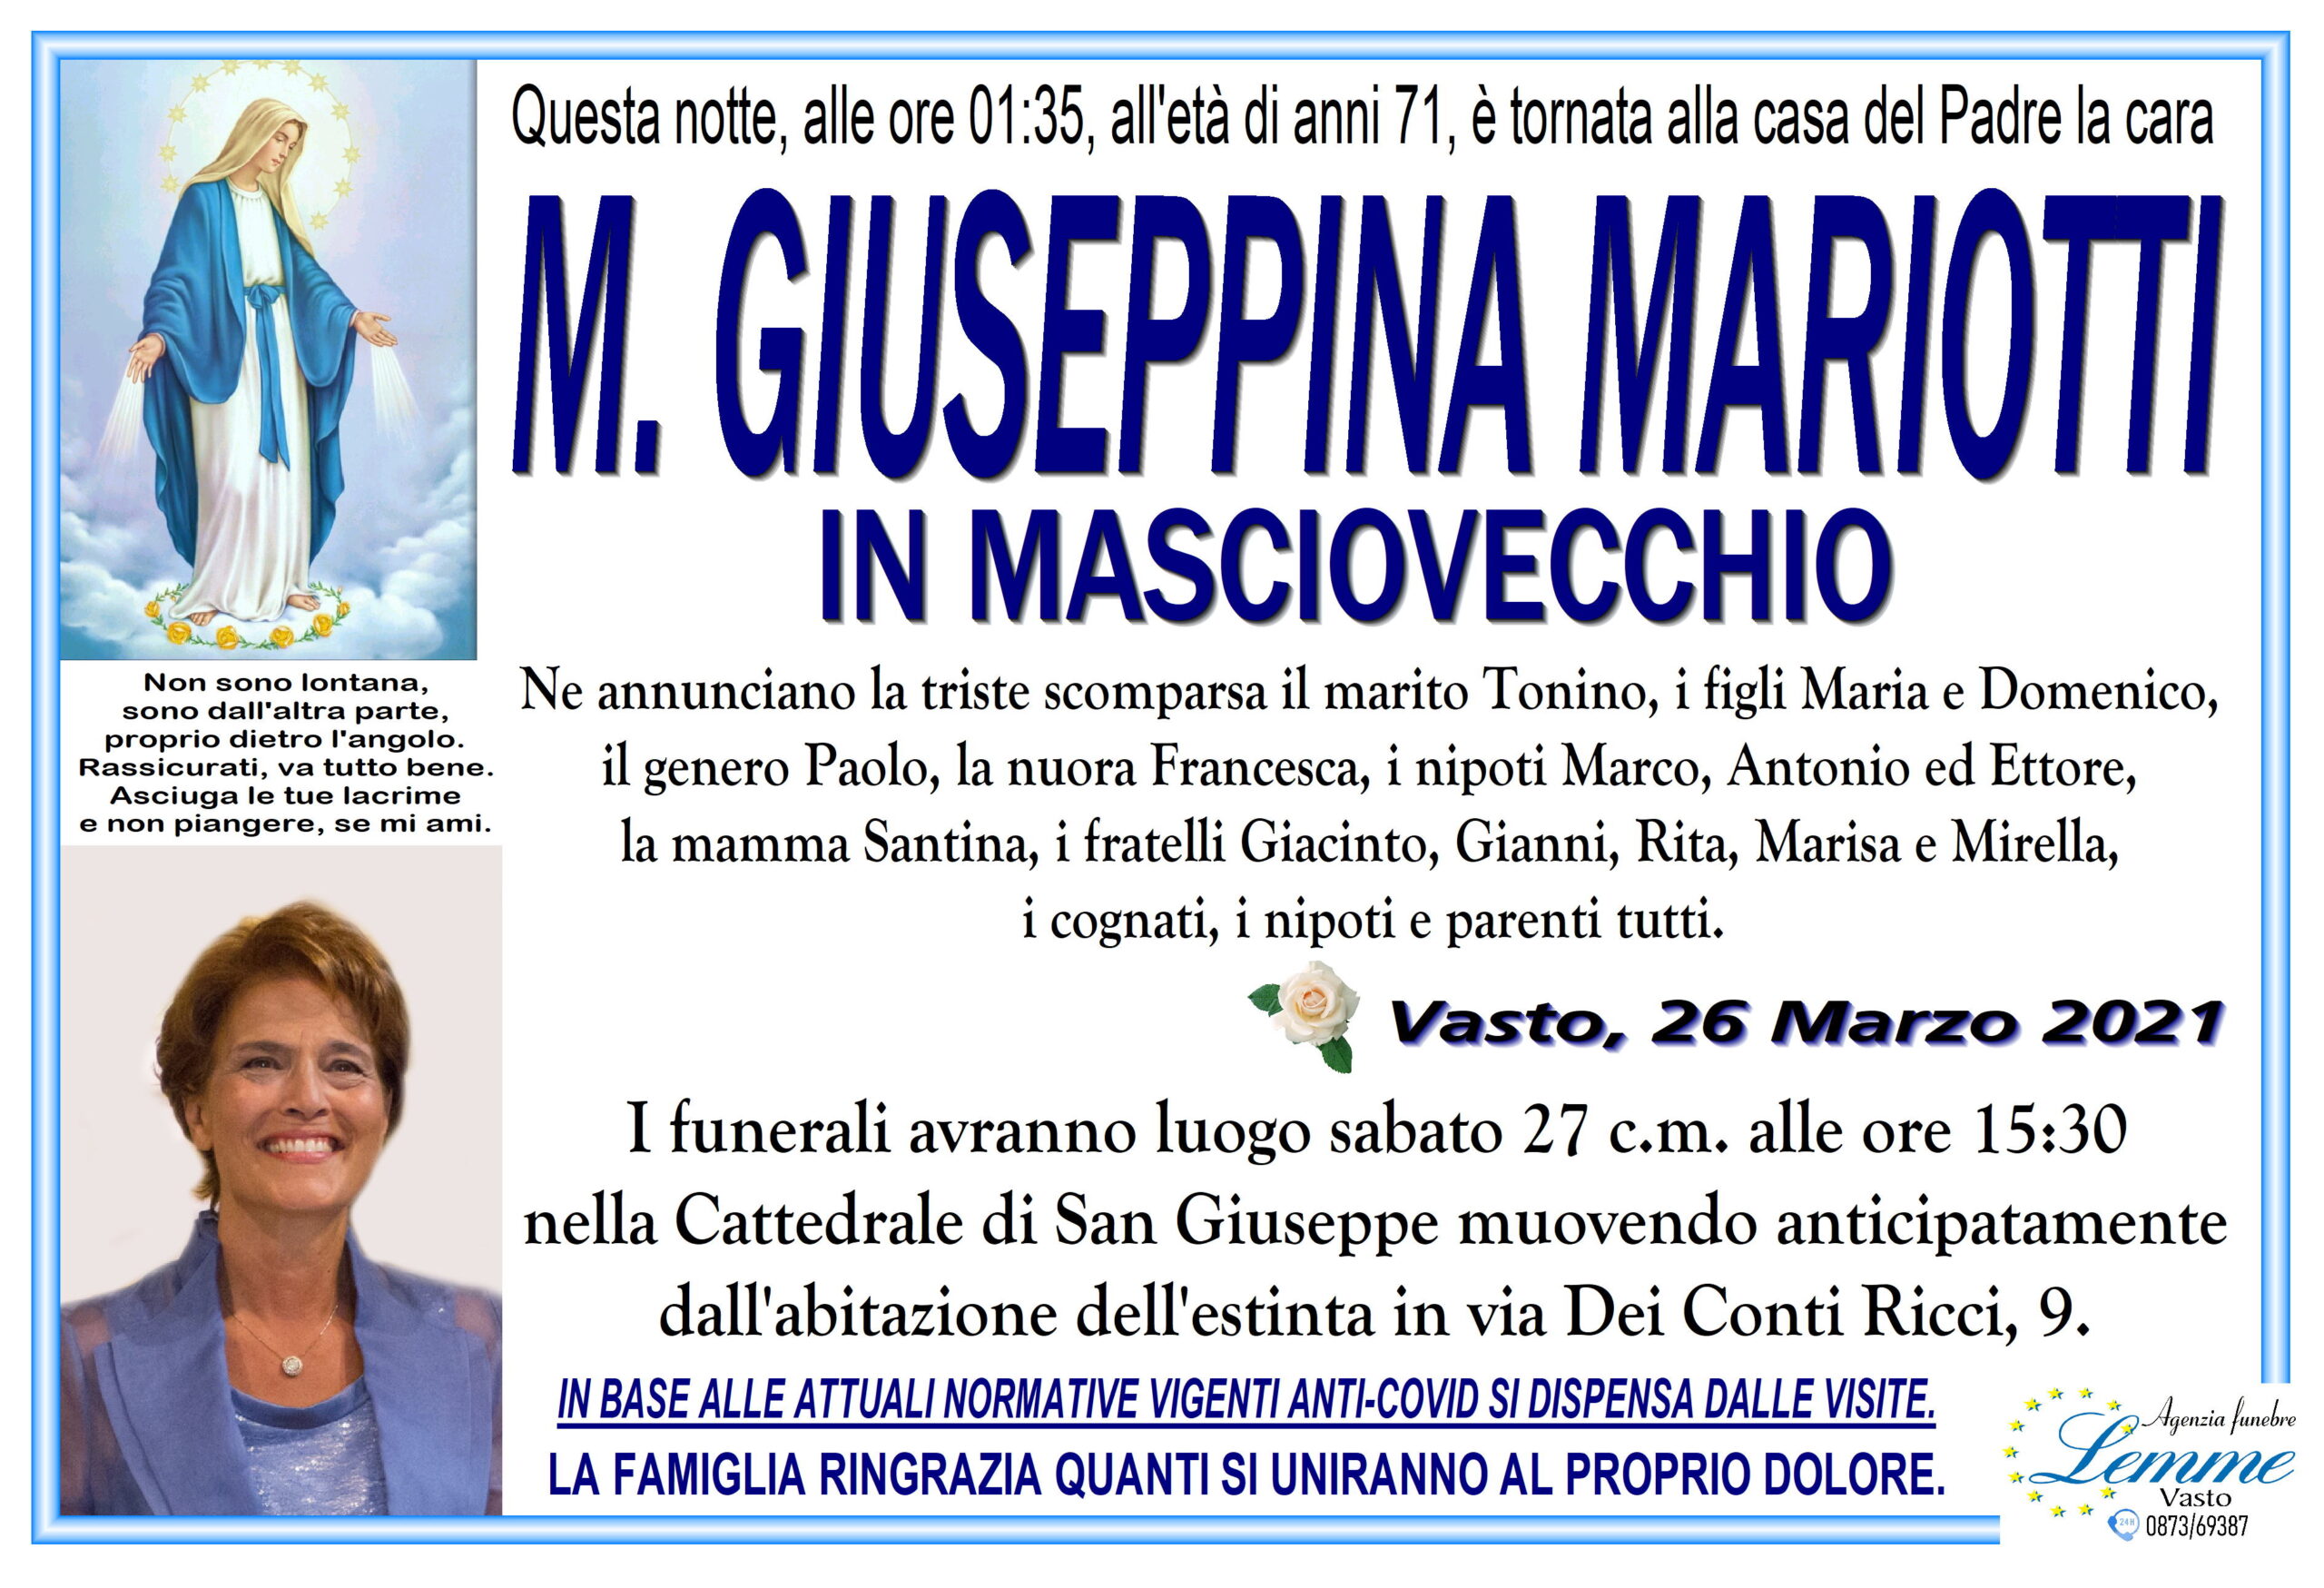 M. GIUSEPPINA MARIOTTI